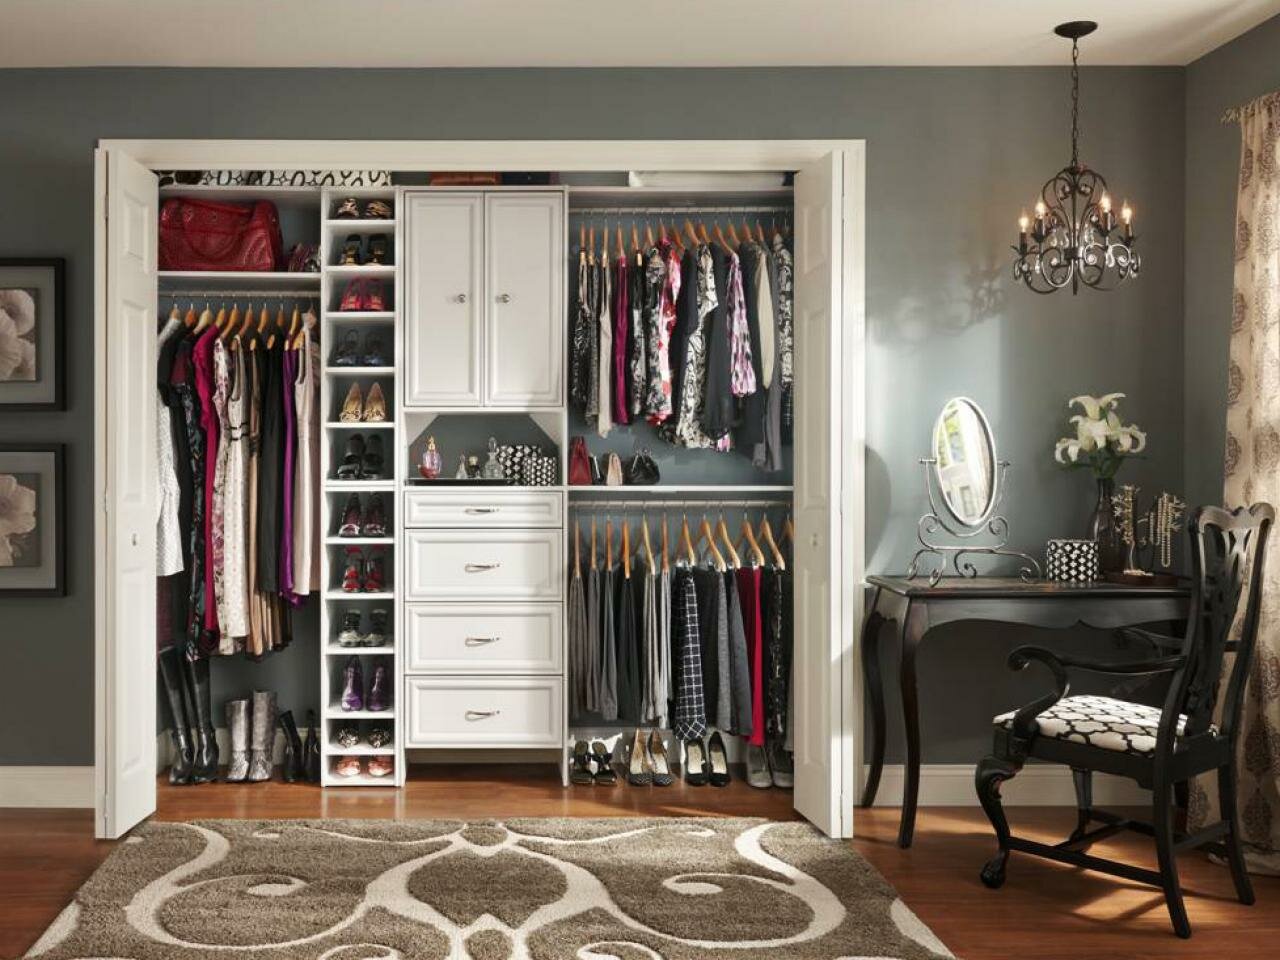 Inspiring Interior Storage Design Ideas with Diy Walk in Closet: How To Make Your Own Closet Organizer | Diy Walk In Closet | Modular Closet Systems